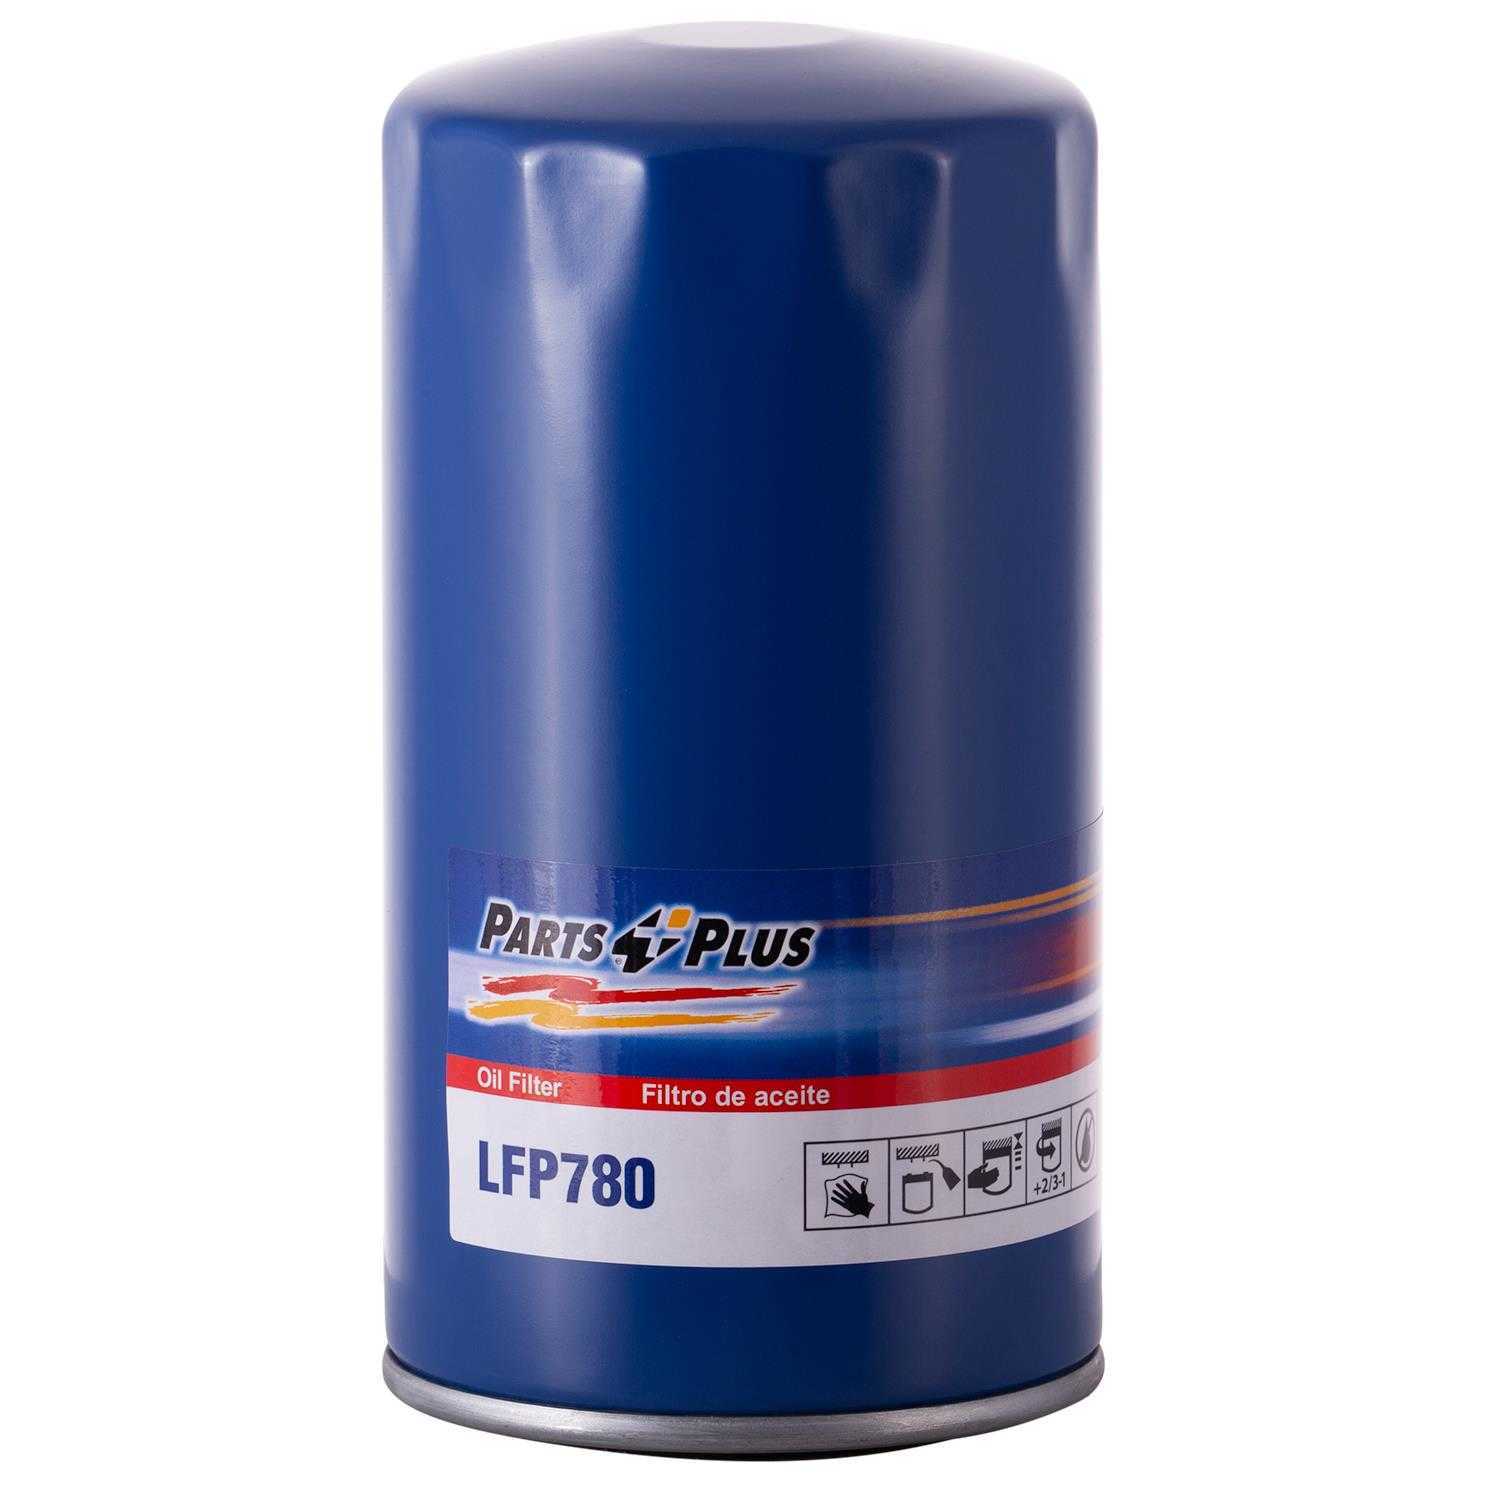 PARTS PLUS FILTERS BY PREMIUM GUARD - Standard Life Oil Filter - PLF LFP780